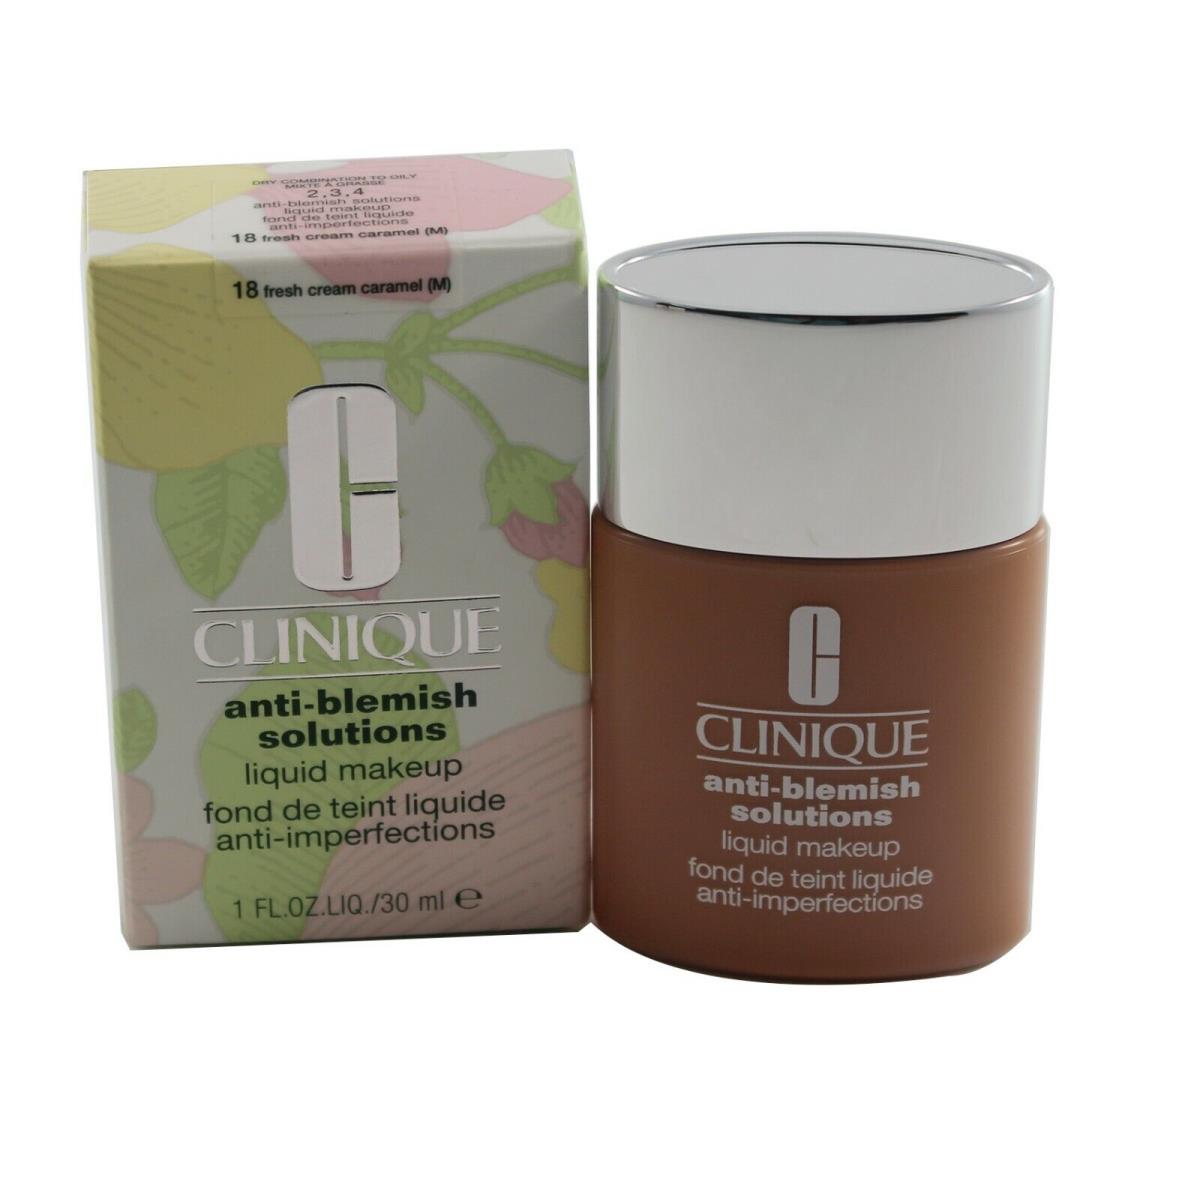 Clinique Anti Blemish/acne Solutions Liquid Makeup Choose Shade 18 Fresh Cream Caramel